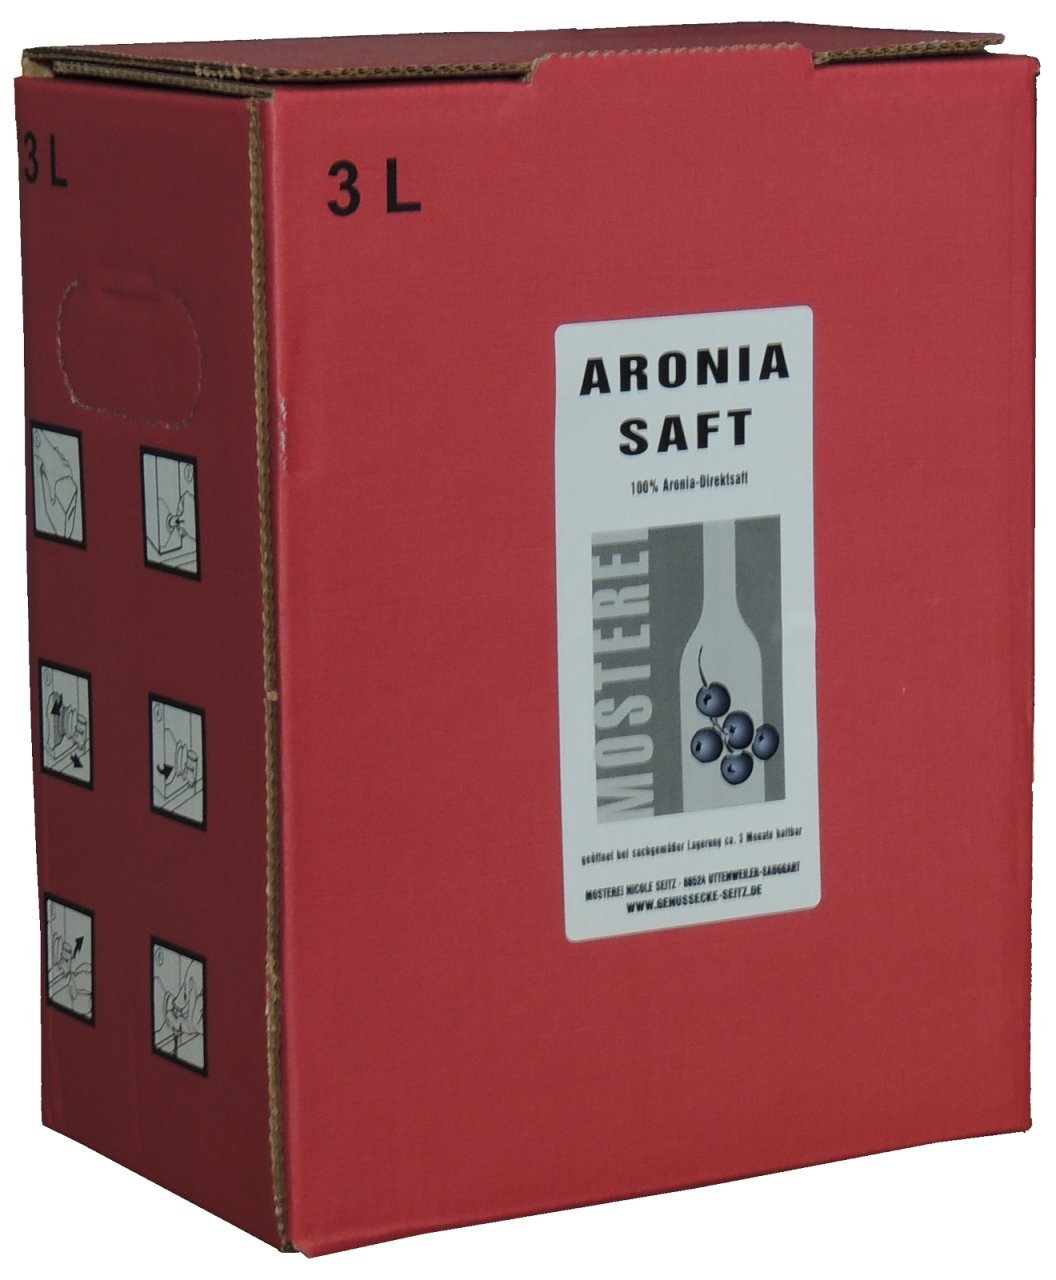 Aronia-Saft Direktsaft 6x 3L Bag in Box